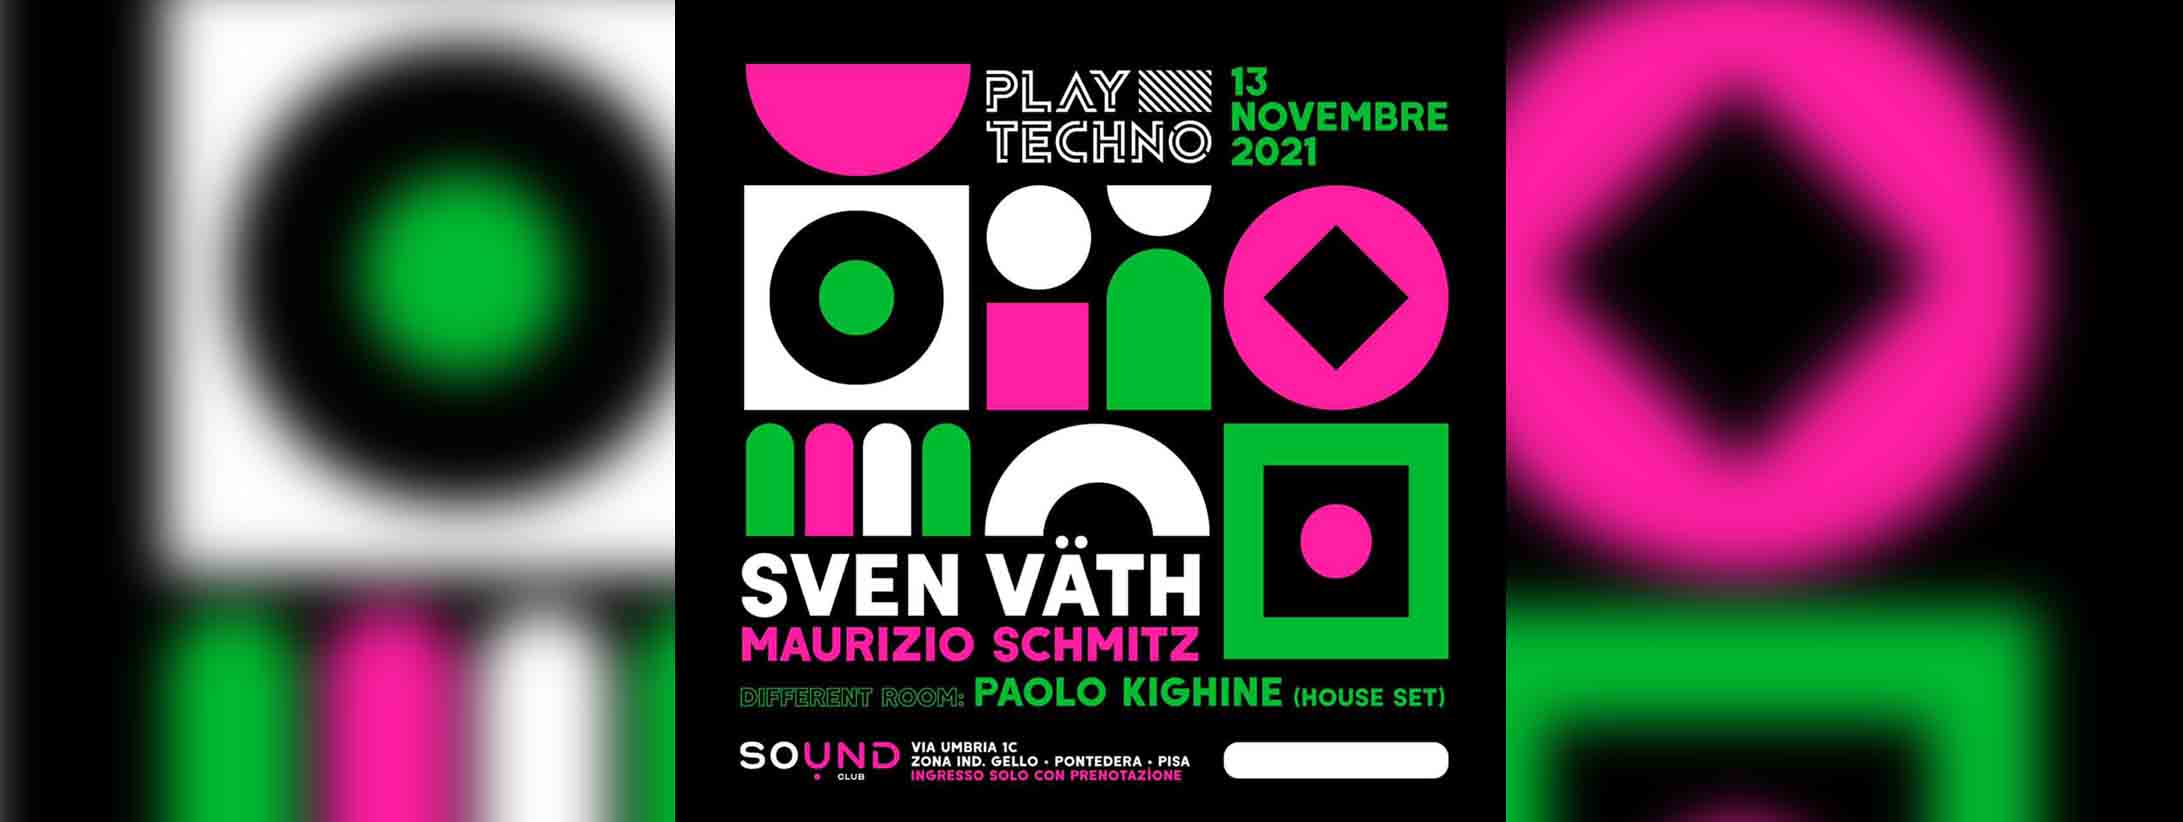 sven vath play techno sound club 13 novembre 2021